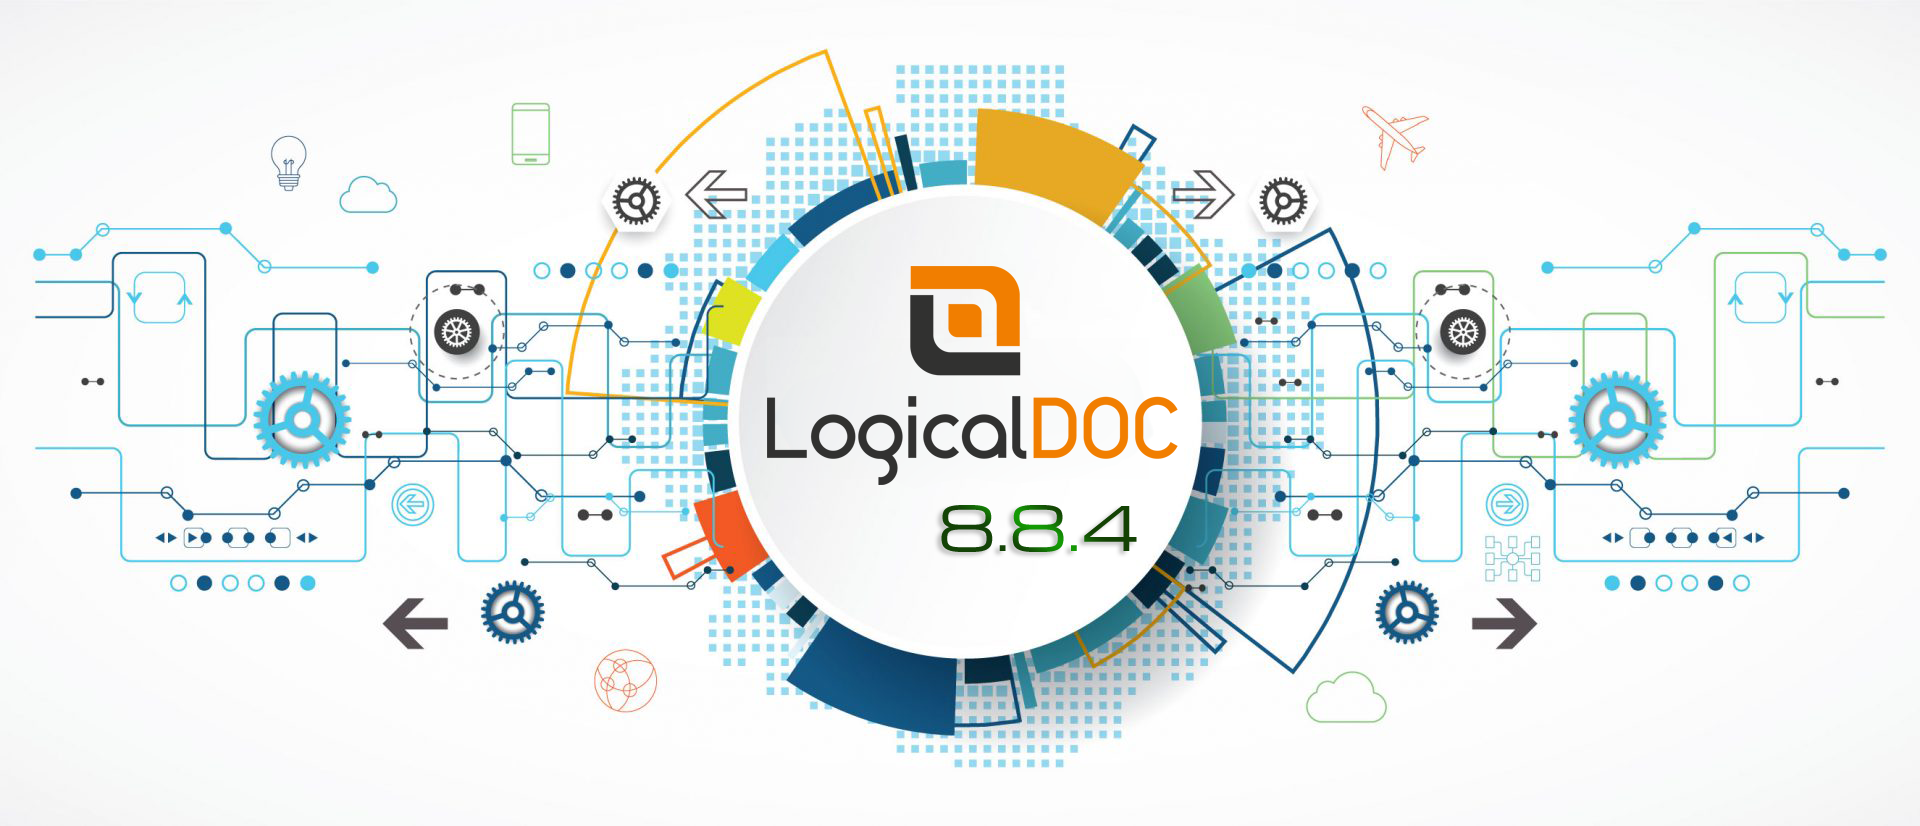 LogicalDOC 8.8.4